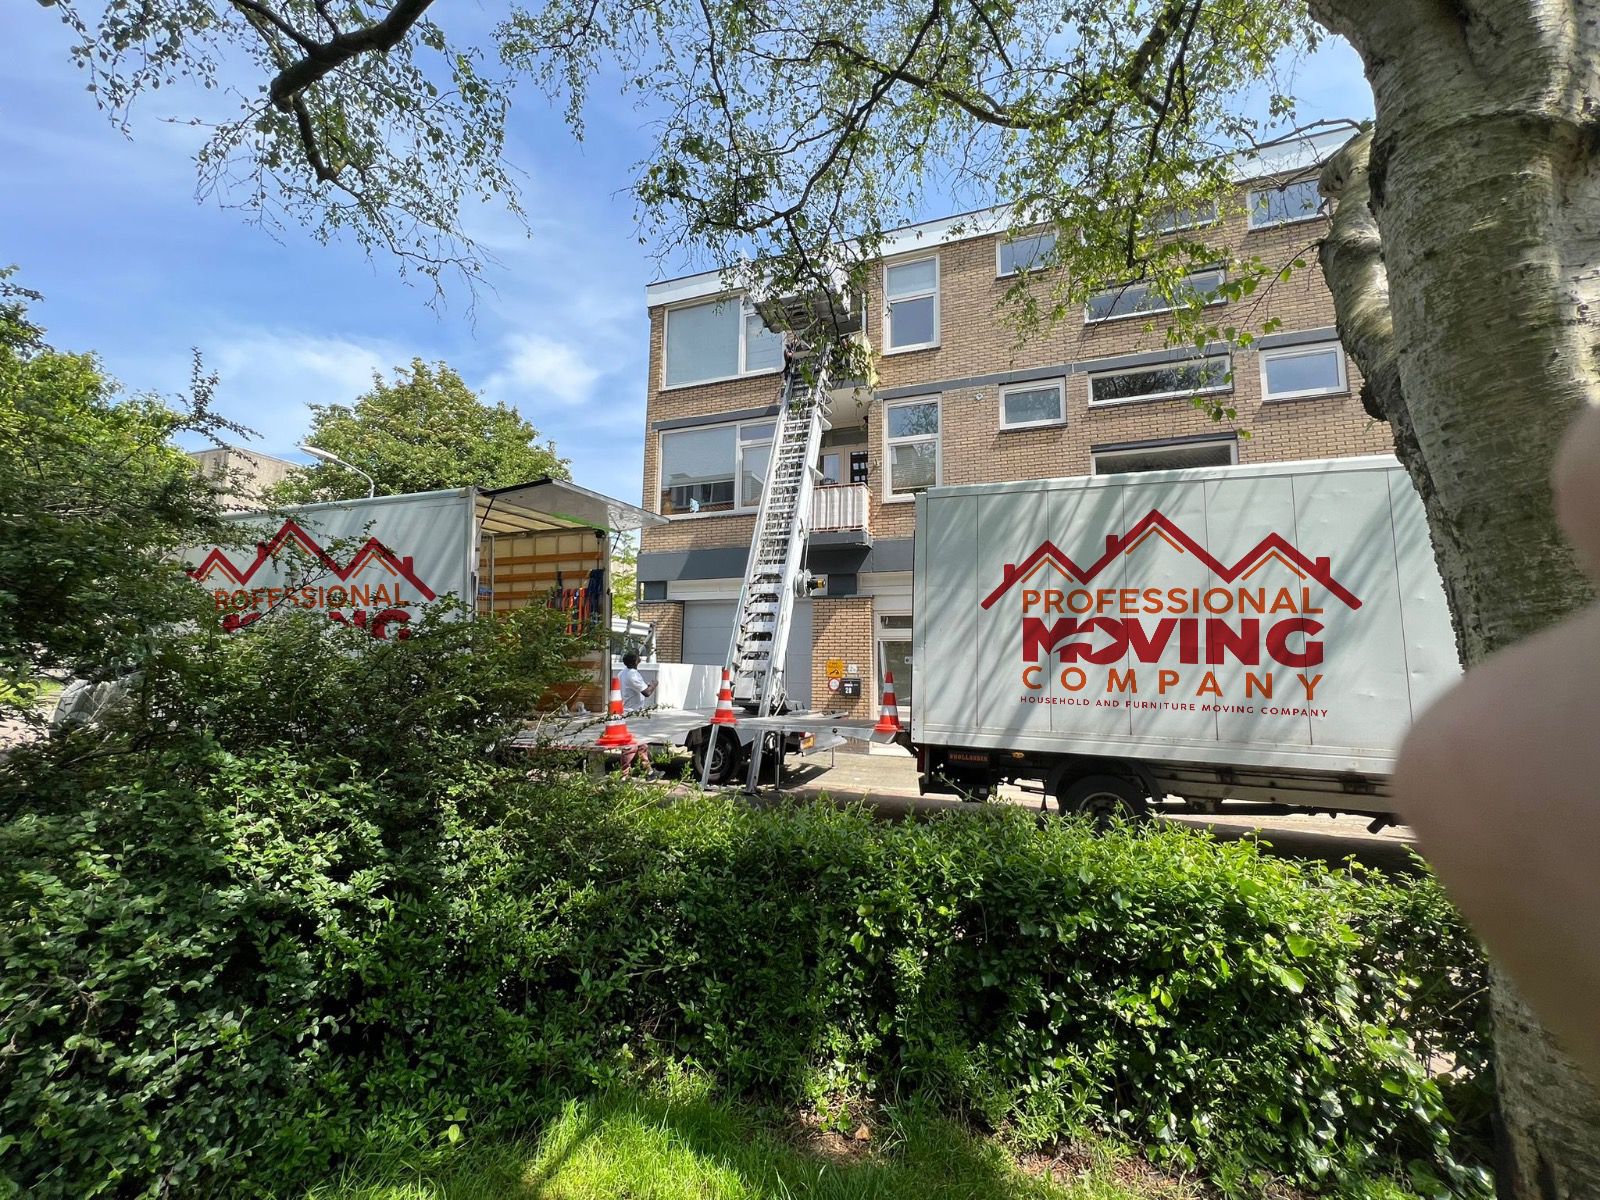 Moving Company Beverwijk